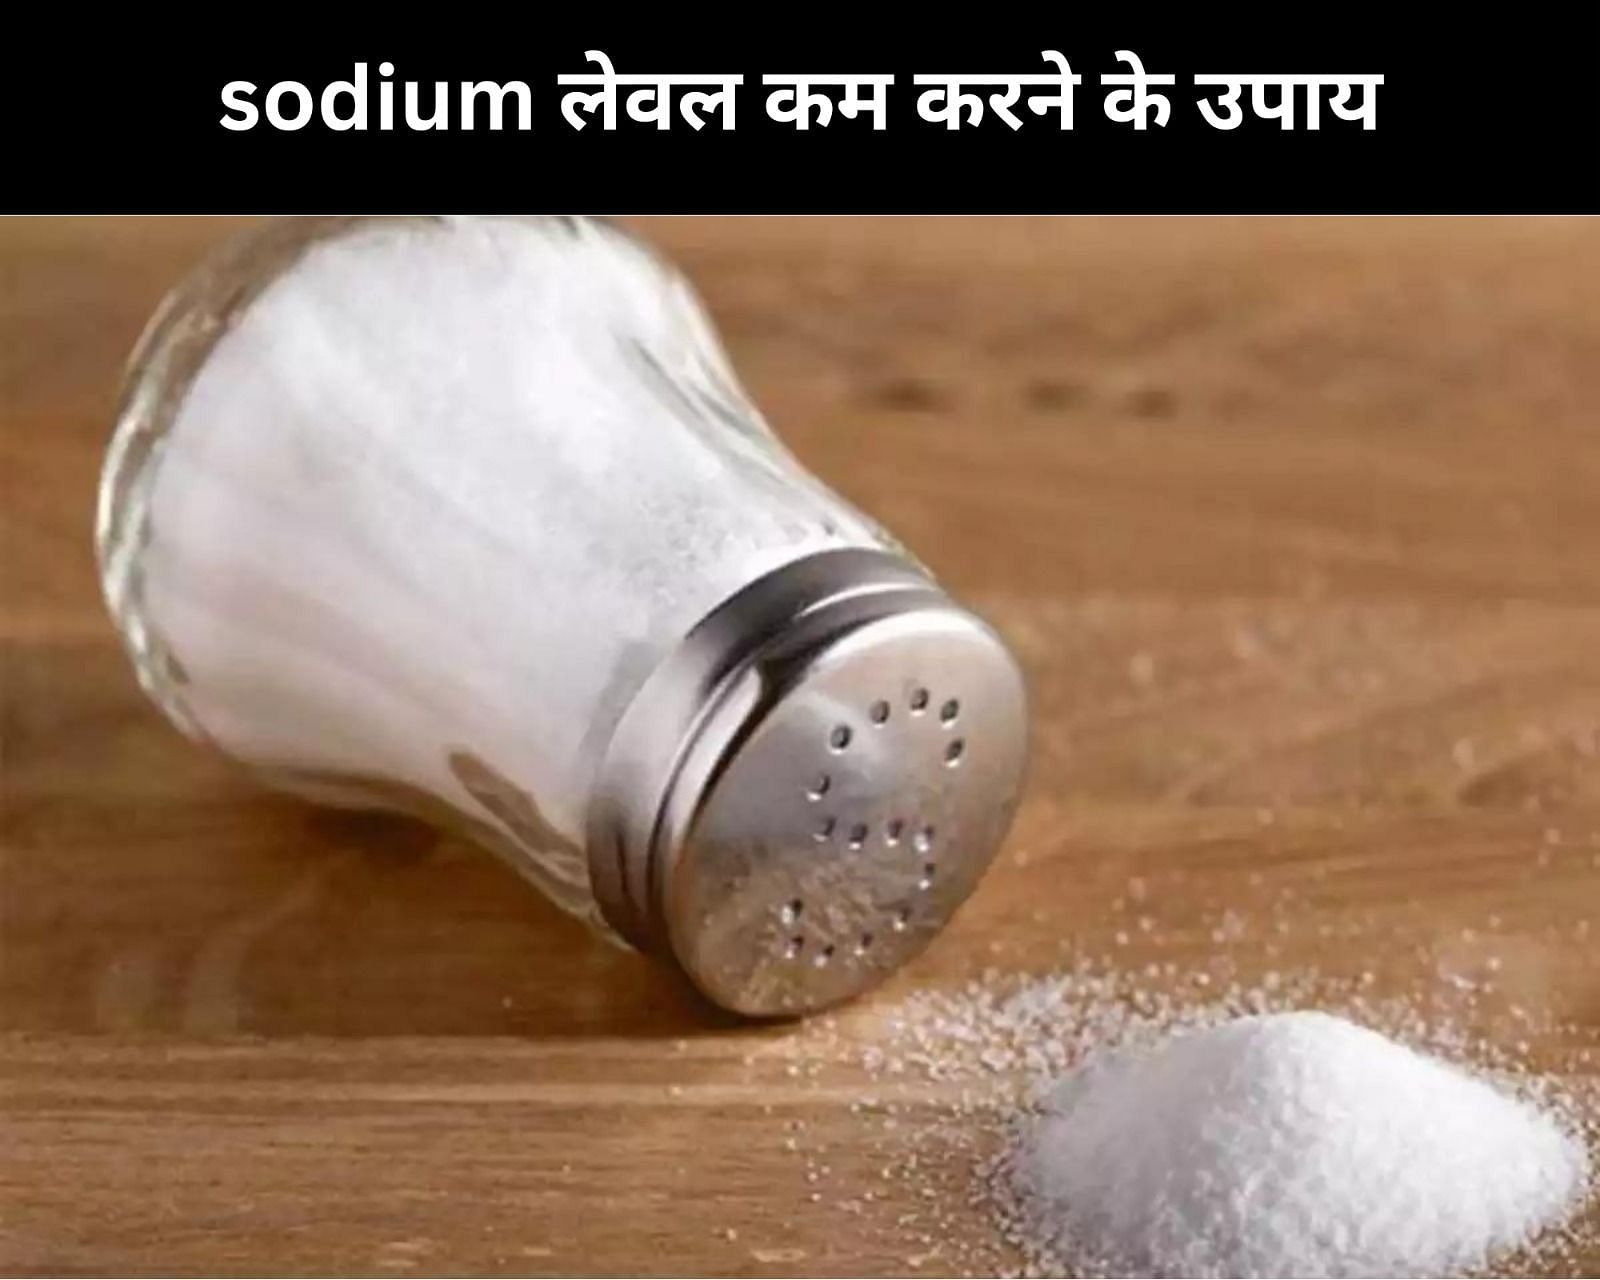 sodium लेवल कम करने के 7 उपाय (फोटो - sportskeedaहिन्दी)